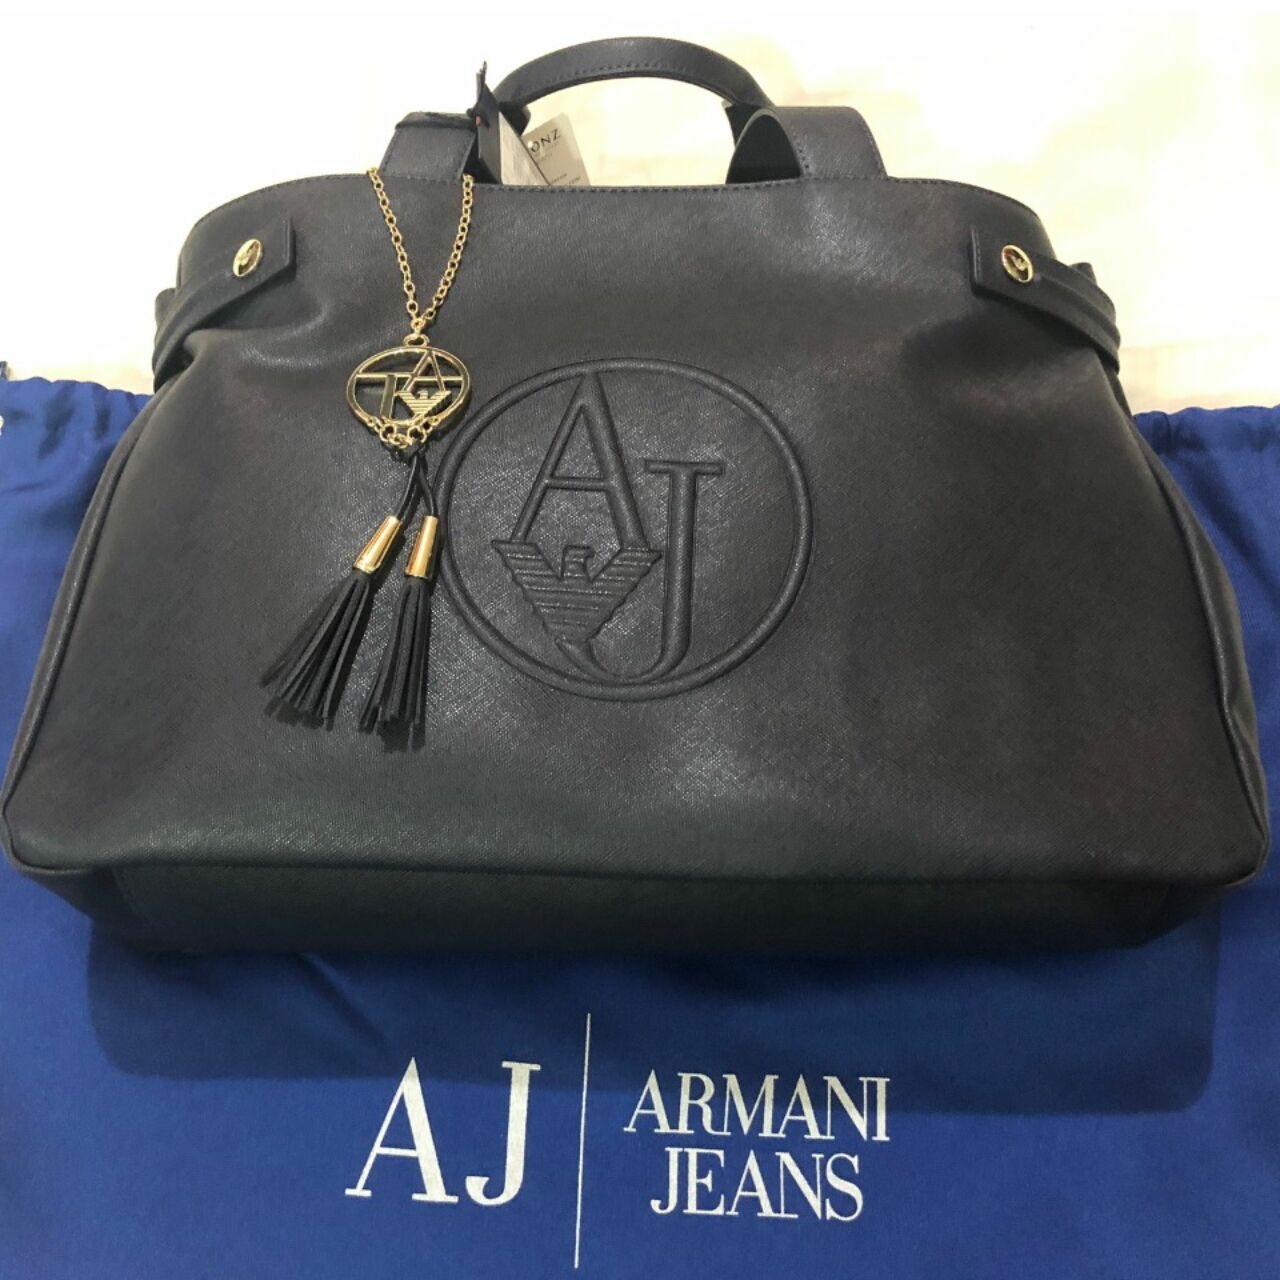 Armani Jeans Navy Tote Bag